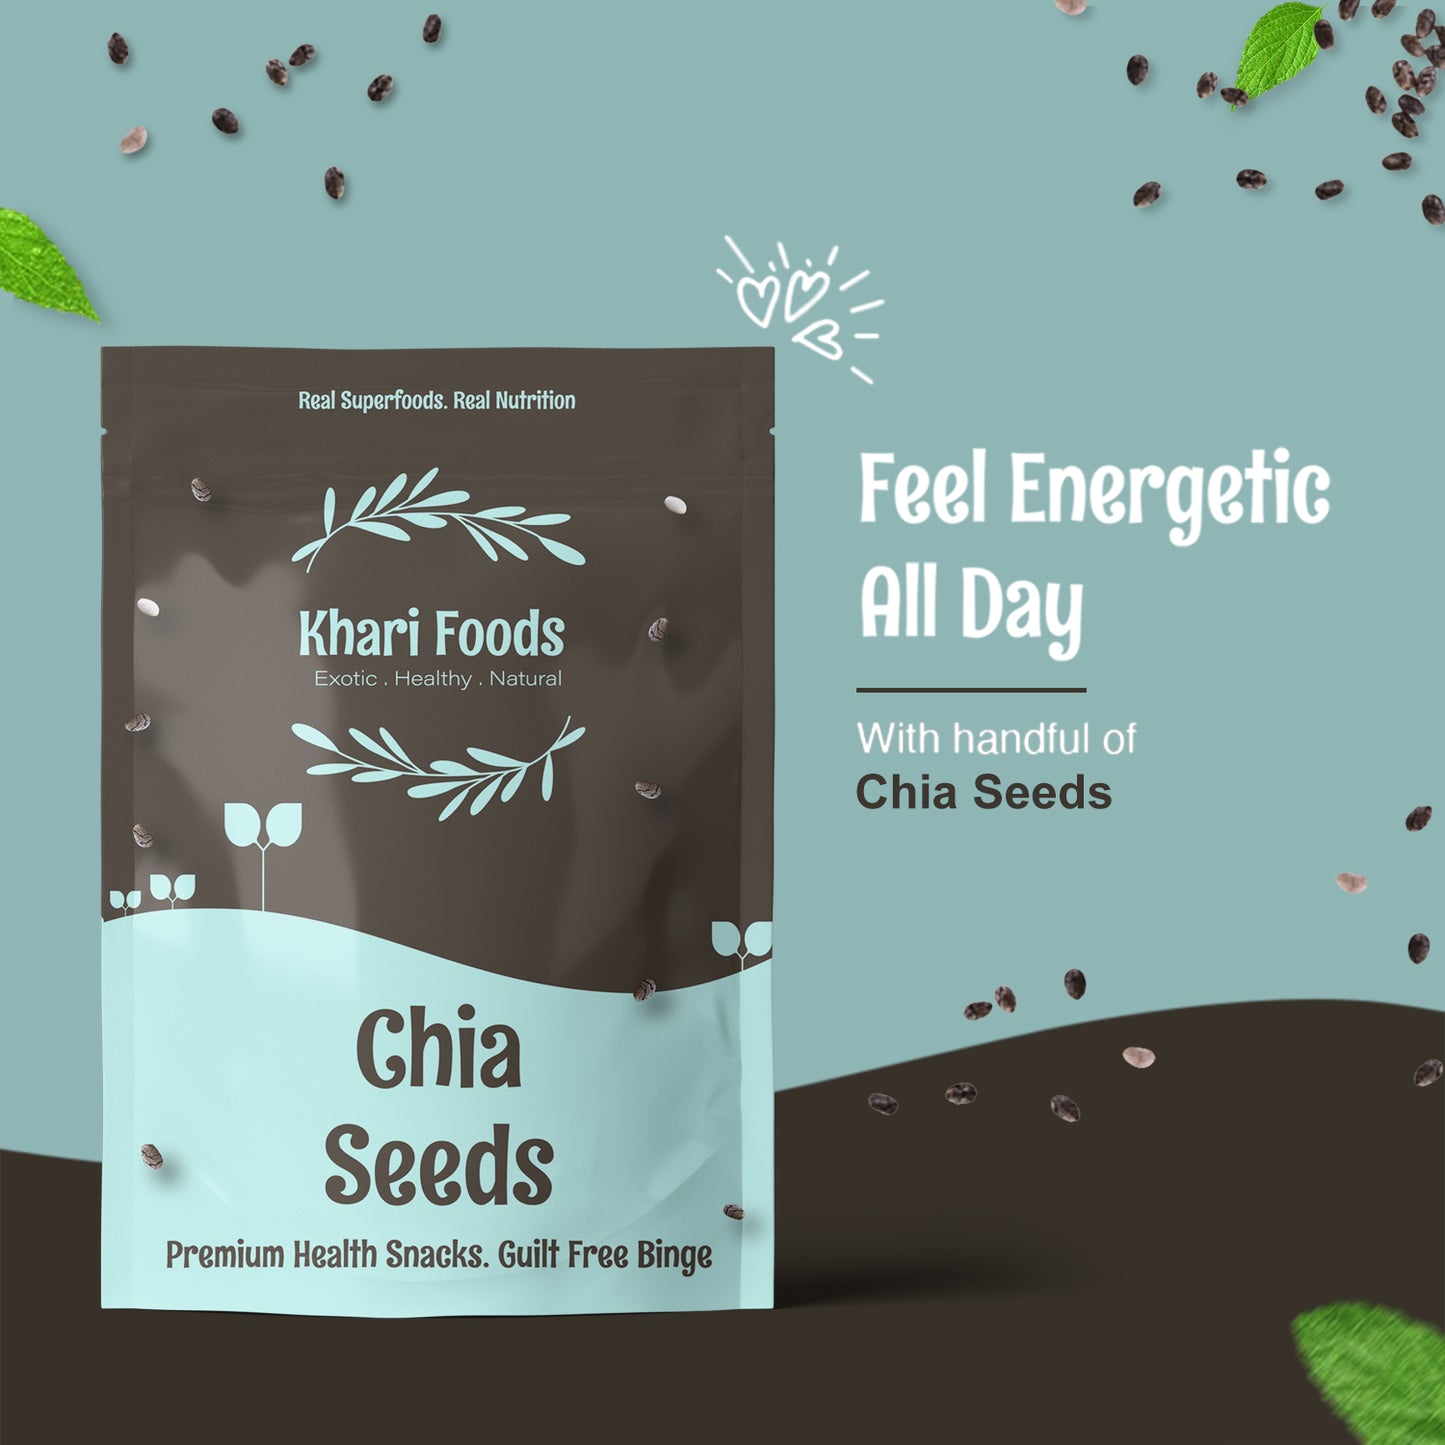 High Fiber Chia, Flax Seeds Combo (200g x 2)